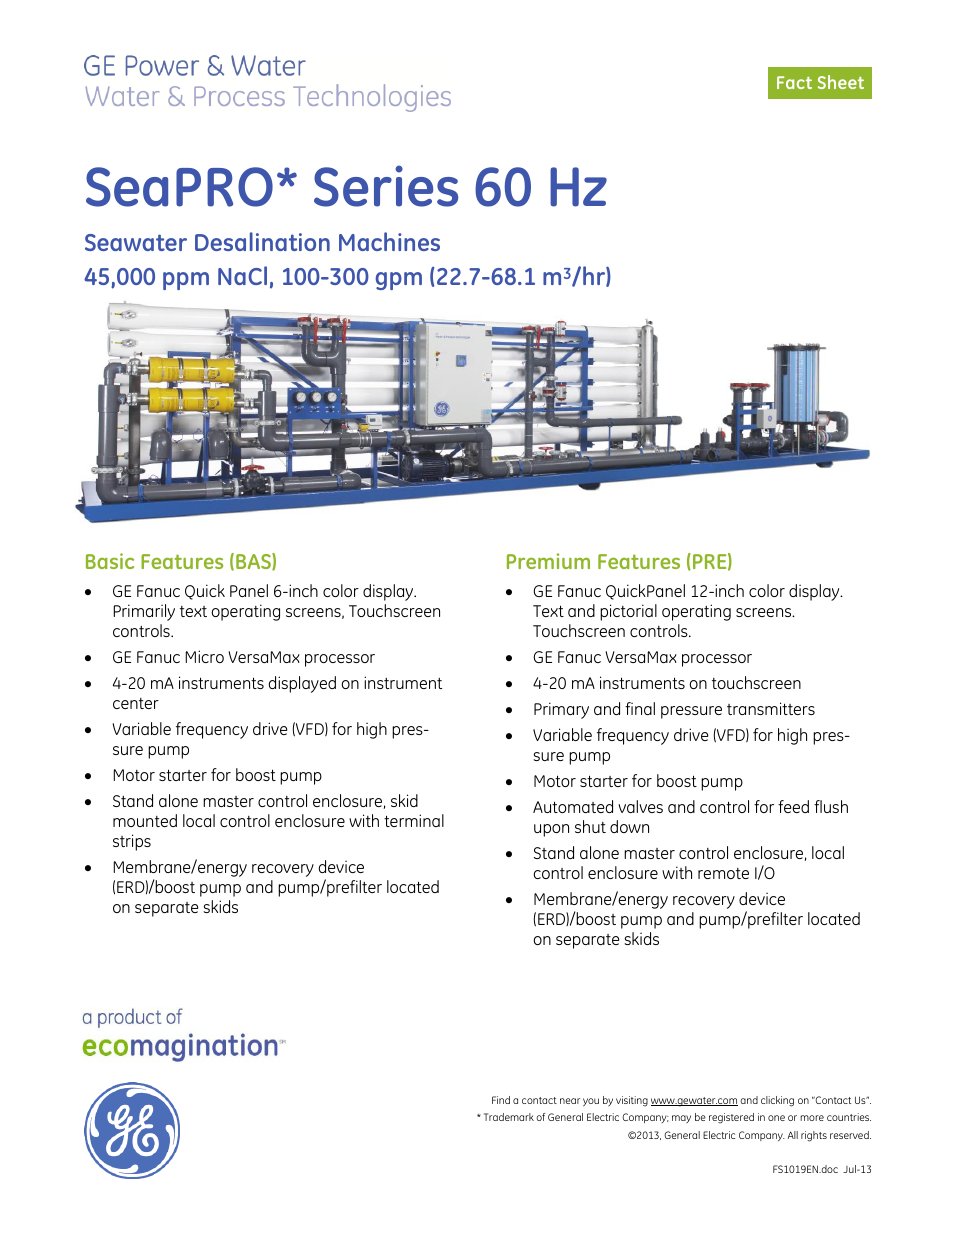 SeaPRO 60 Hz 45,000 ppm NaCl 100-300 gpm